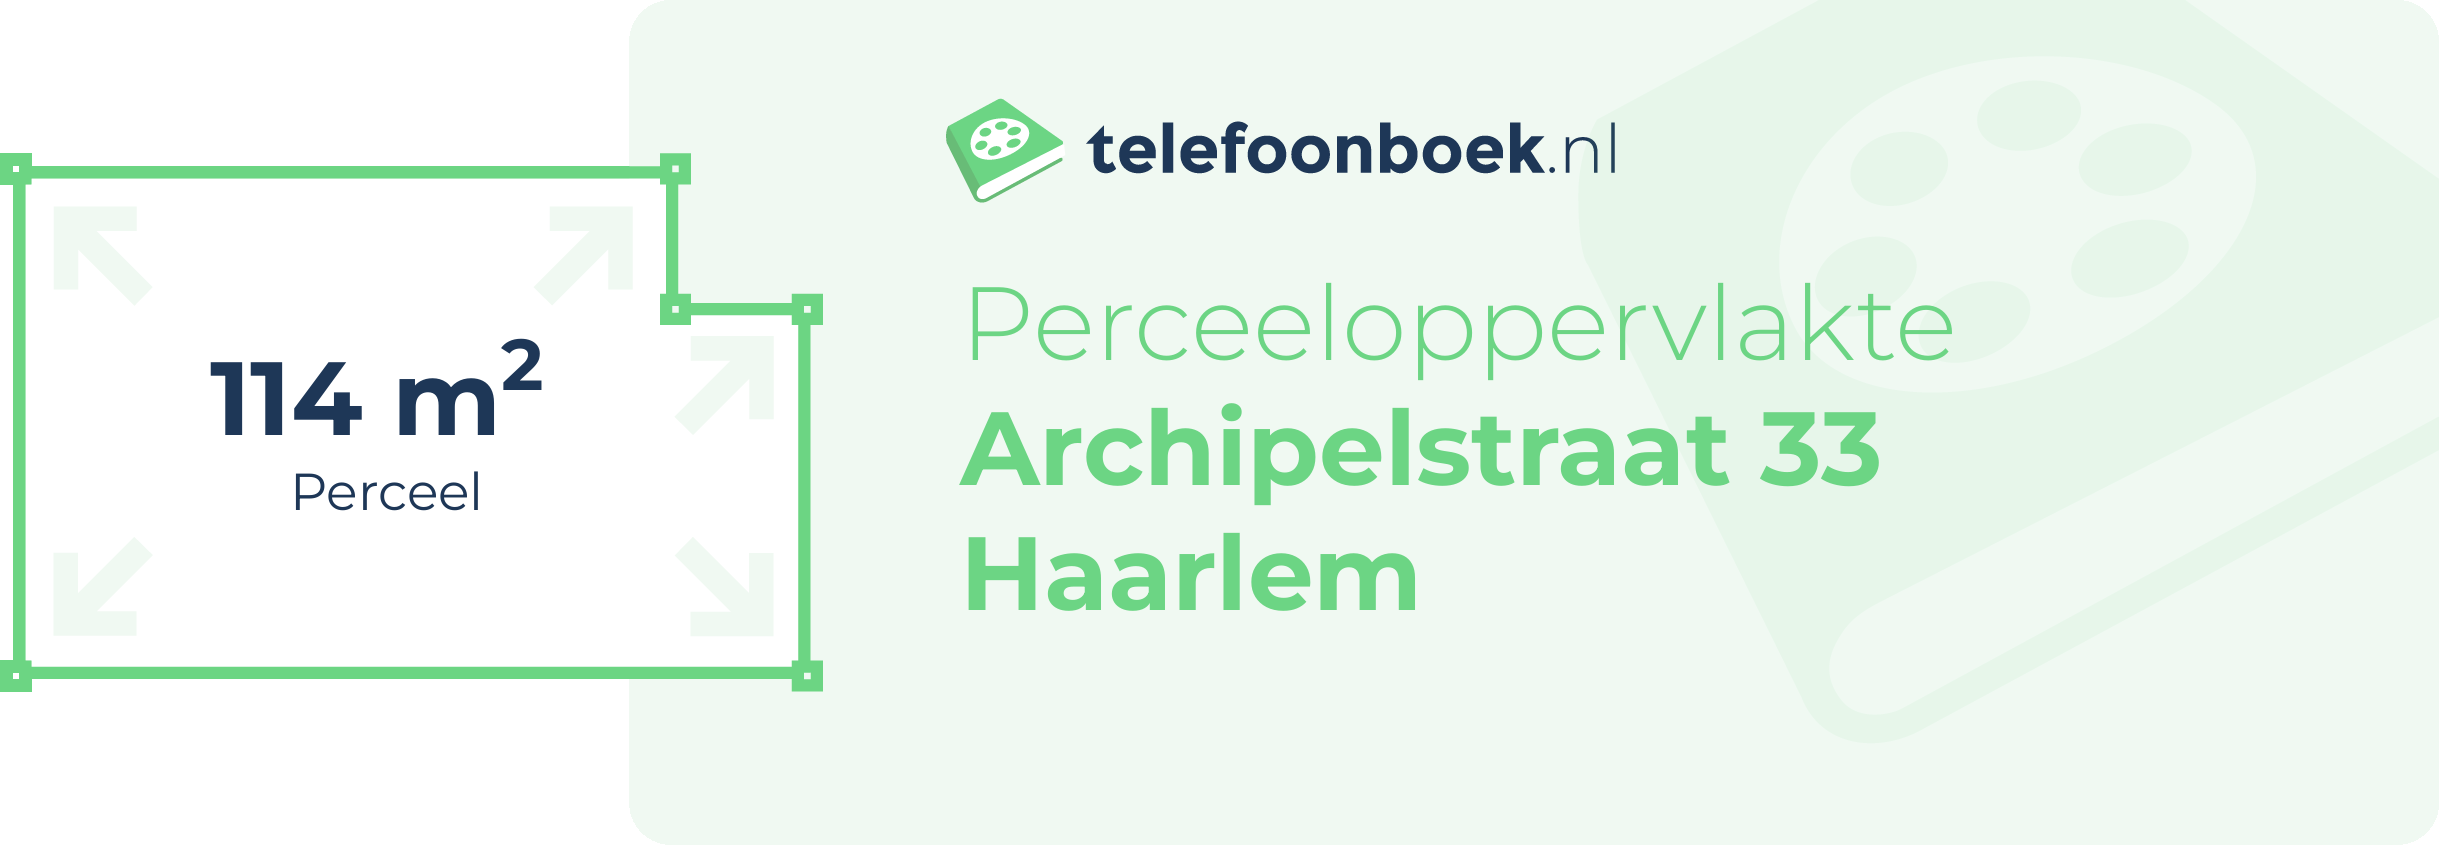 Perceeloppervlakte Archipelstraat 33 Haarlem